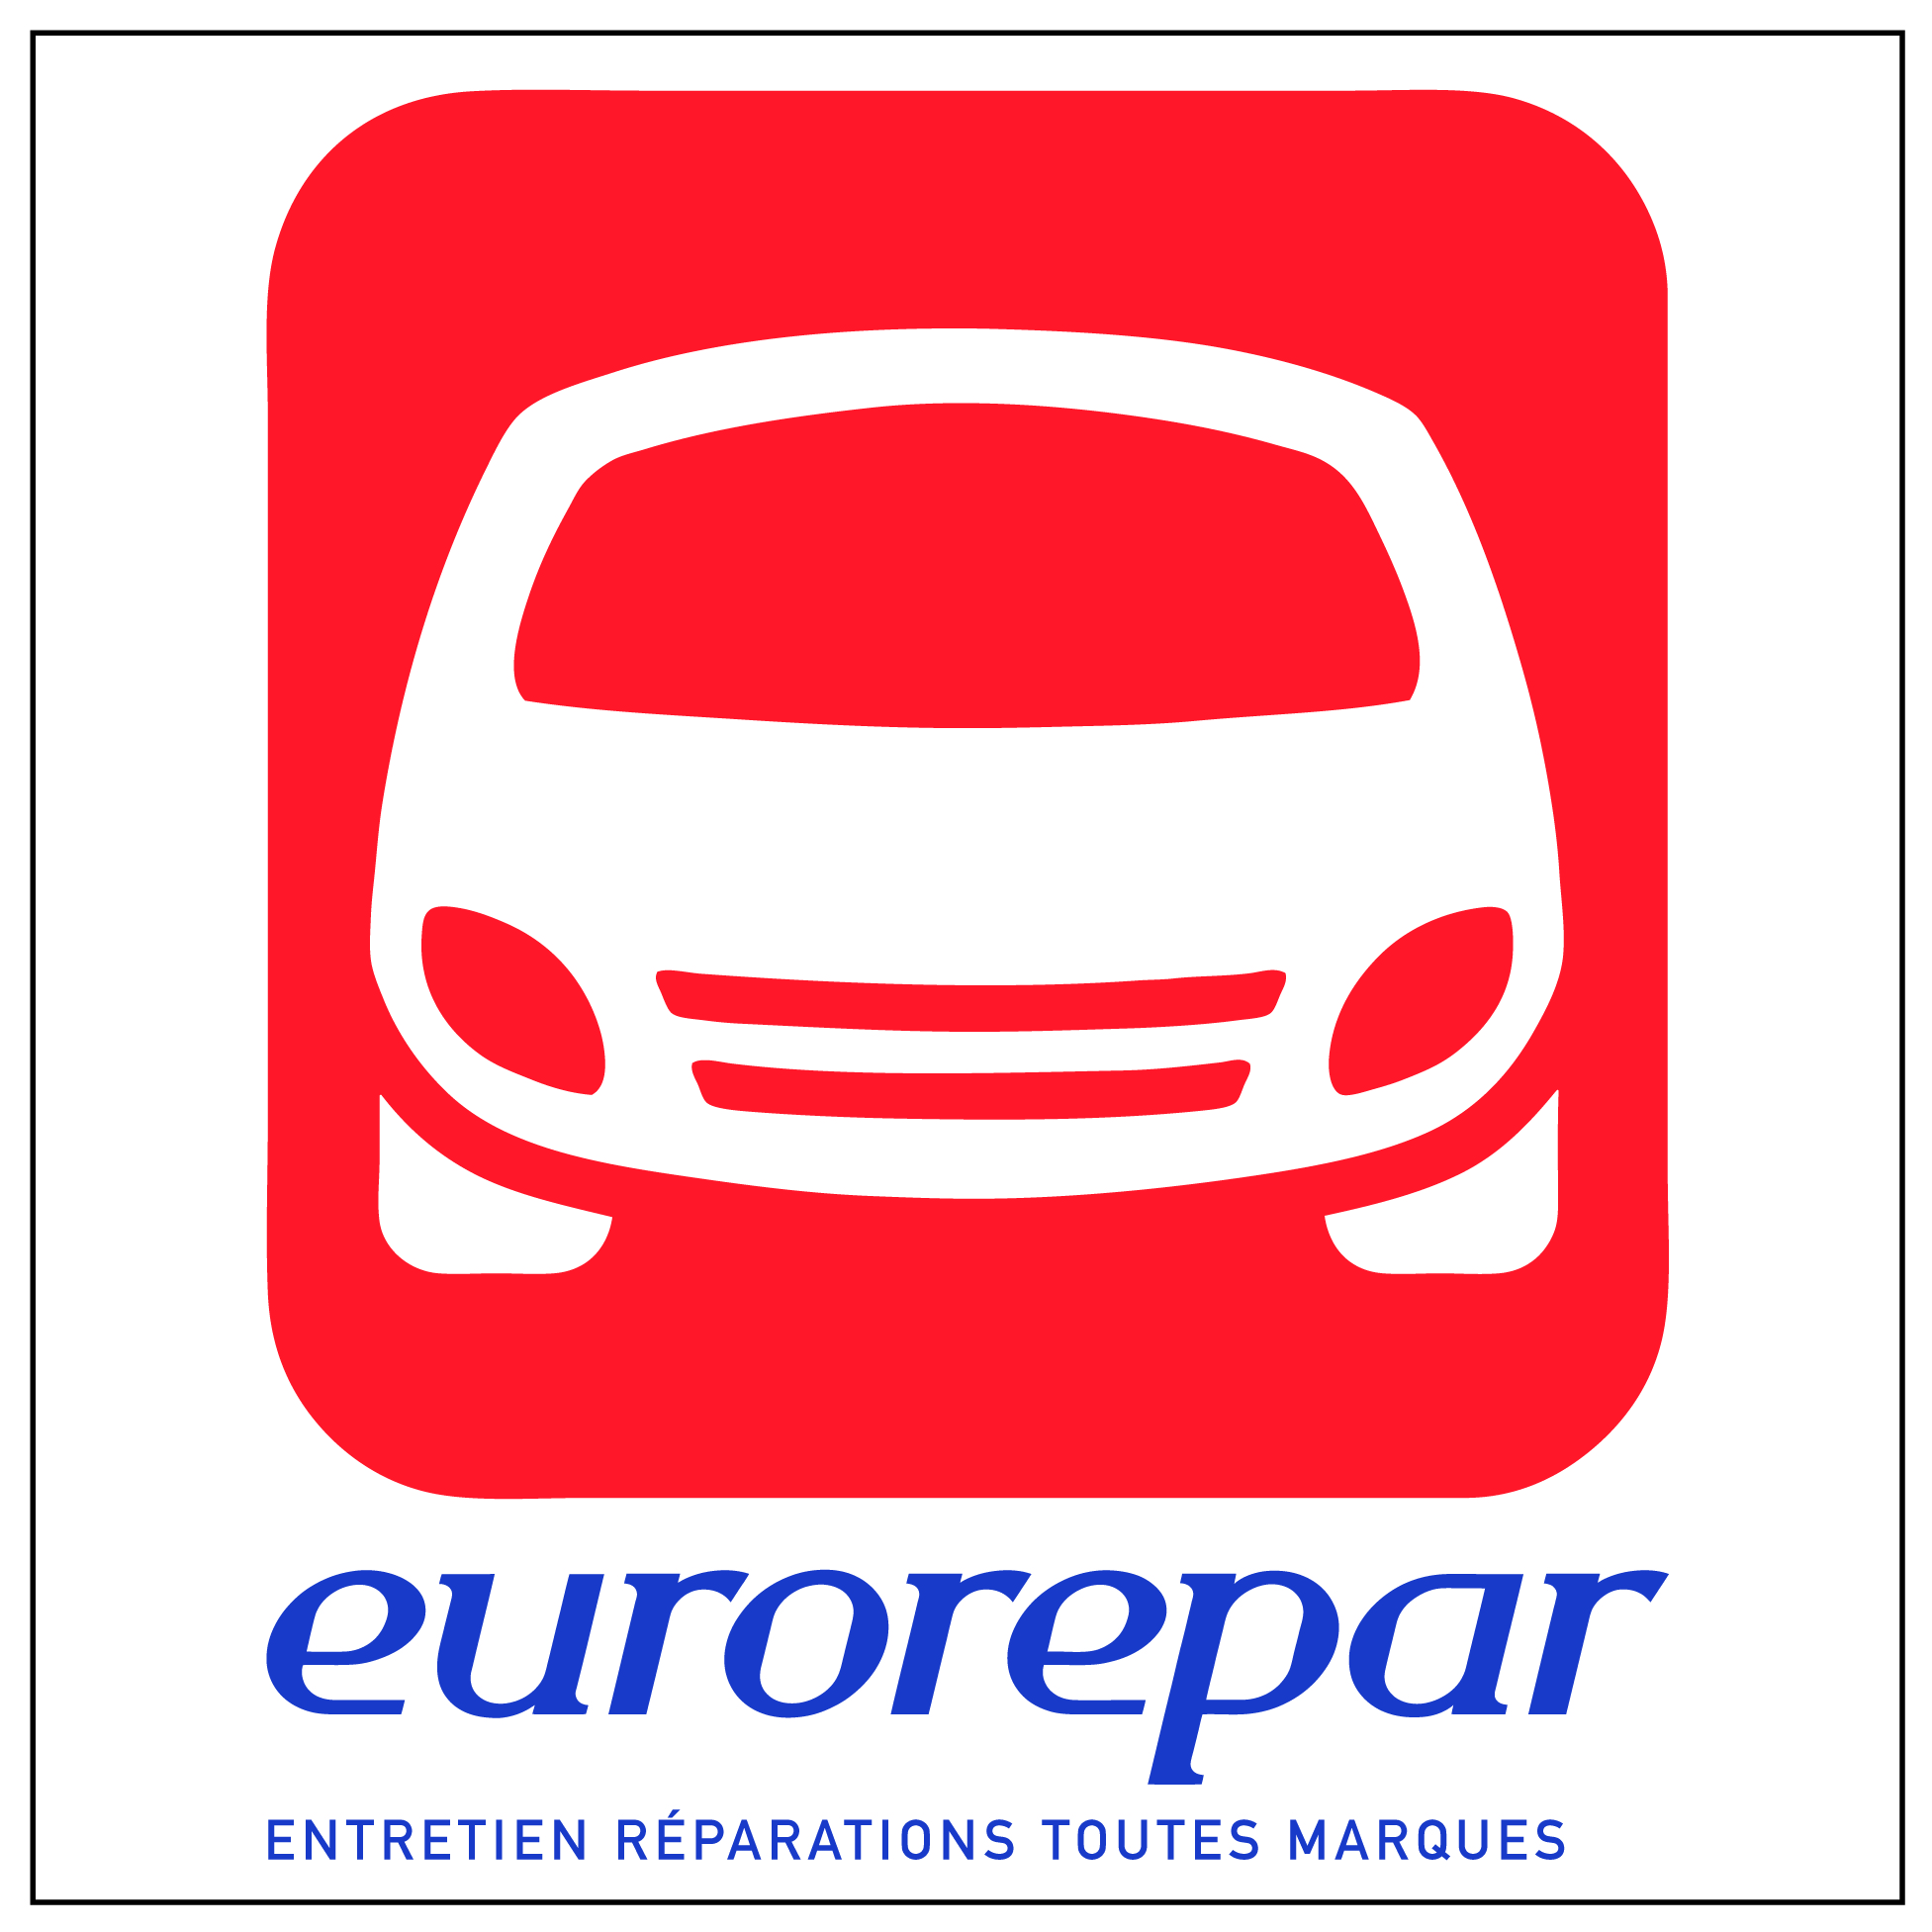 Eurorepar car service